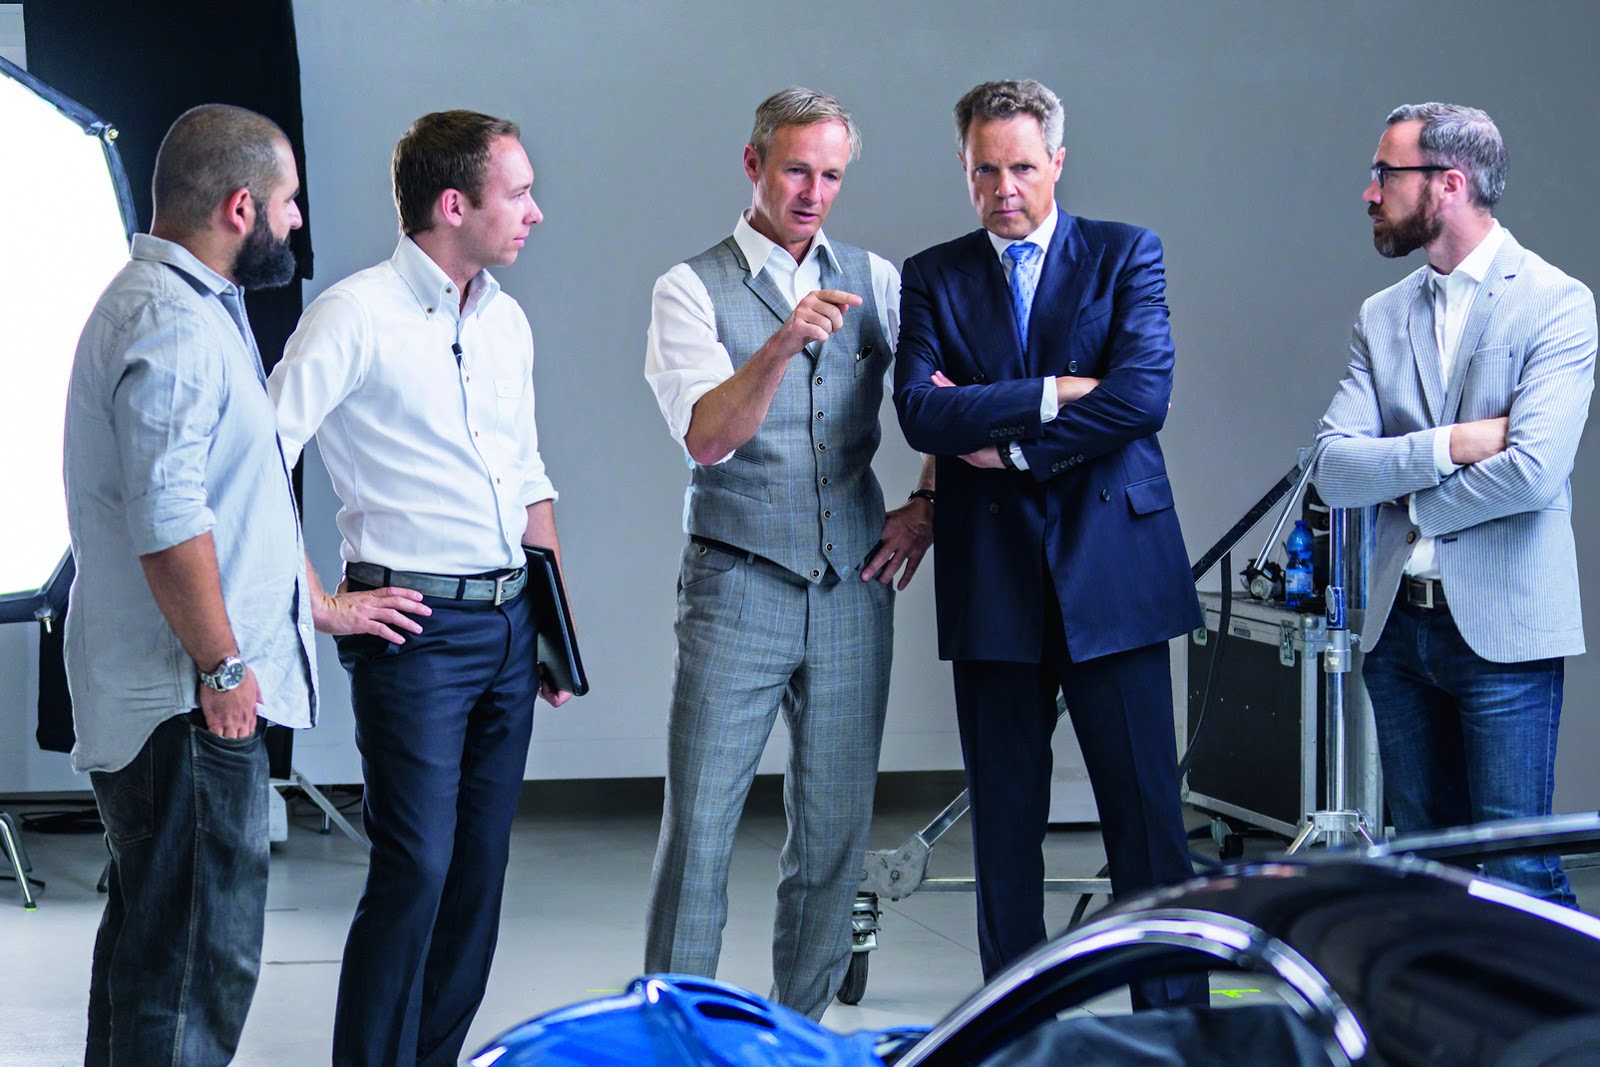 Bugatti Vision Gran Turismo (2015) - Design Team and Bugatti President Wolfgang Durheimer